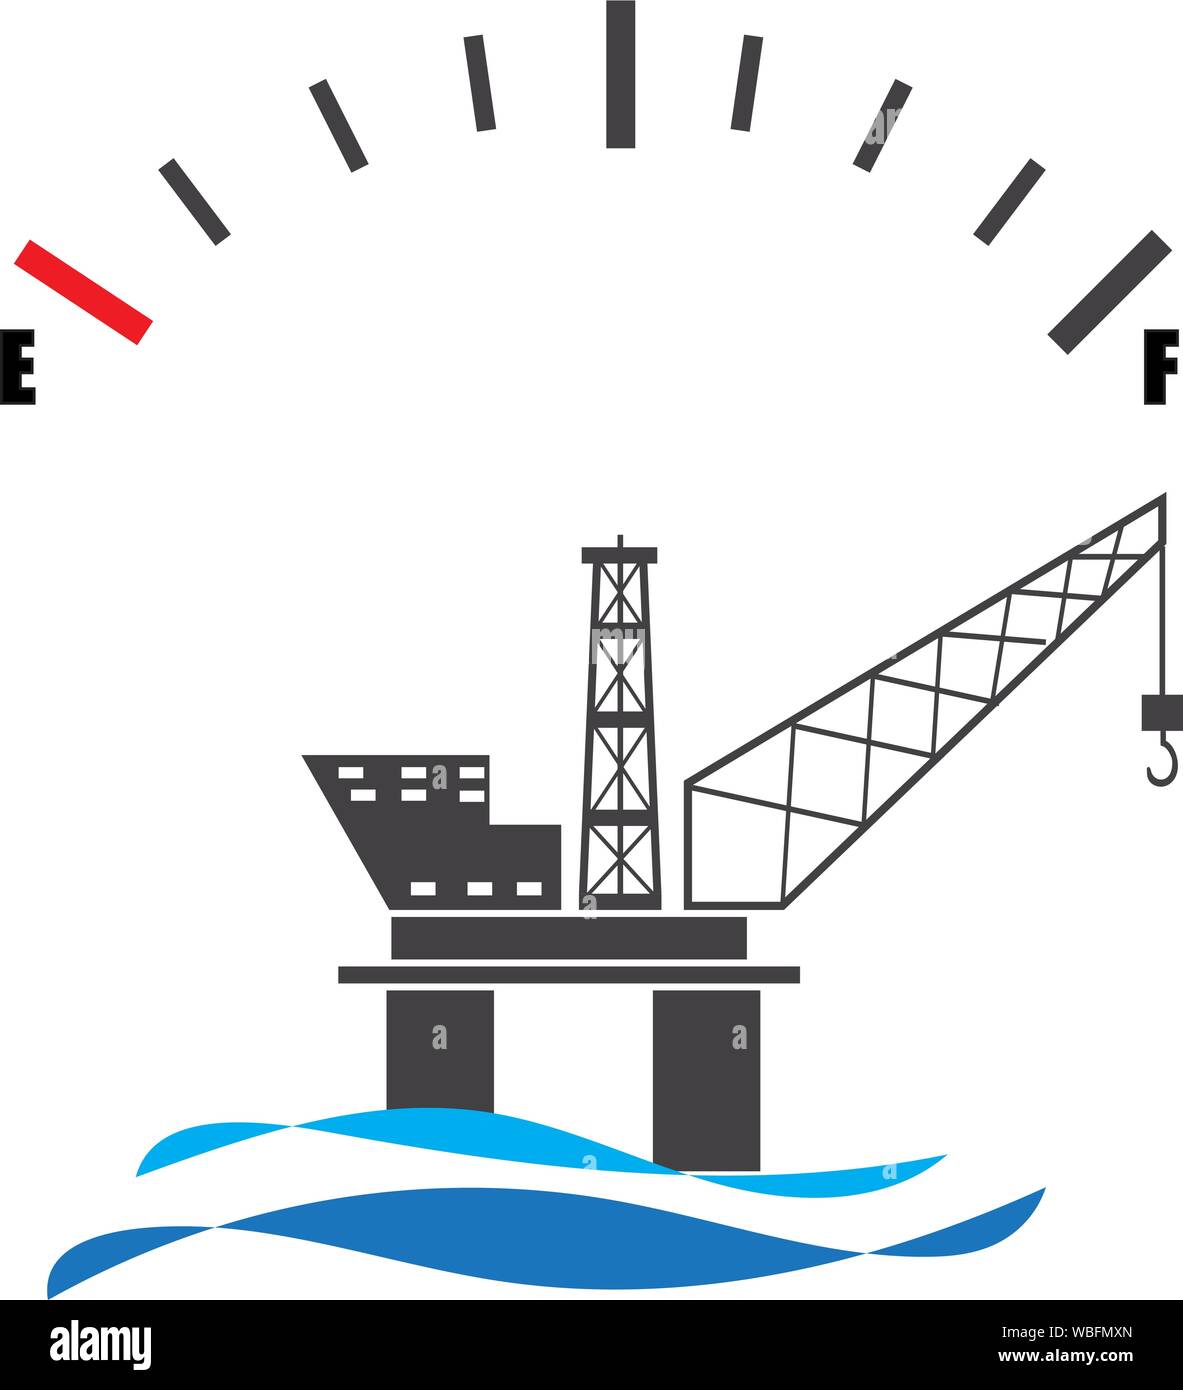 Concept design for offshore oil rig platform with fuel gauge meter Stock Vector